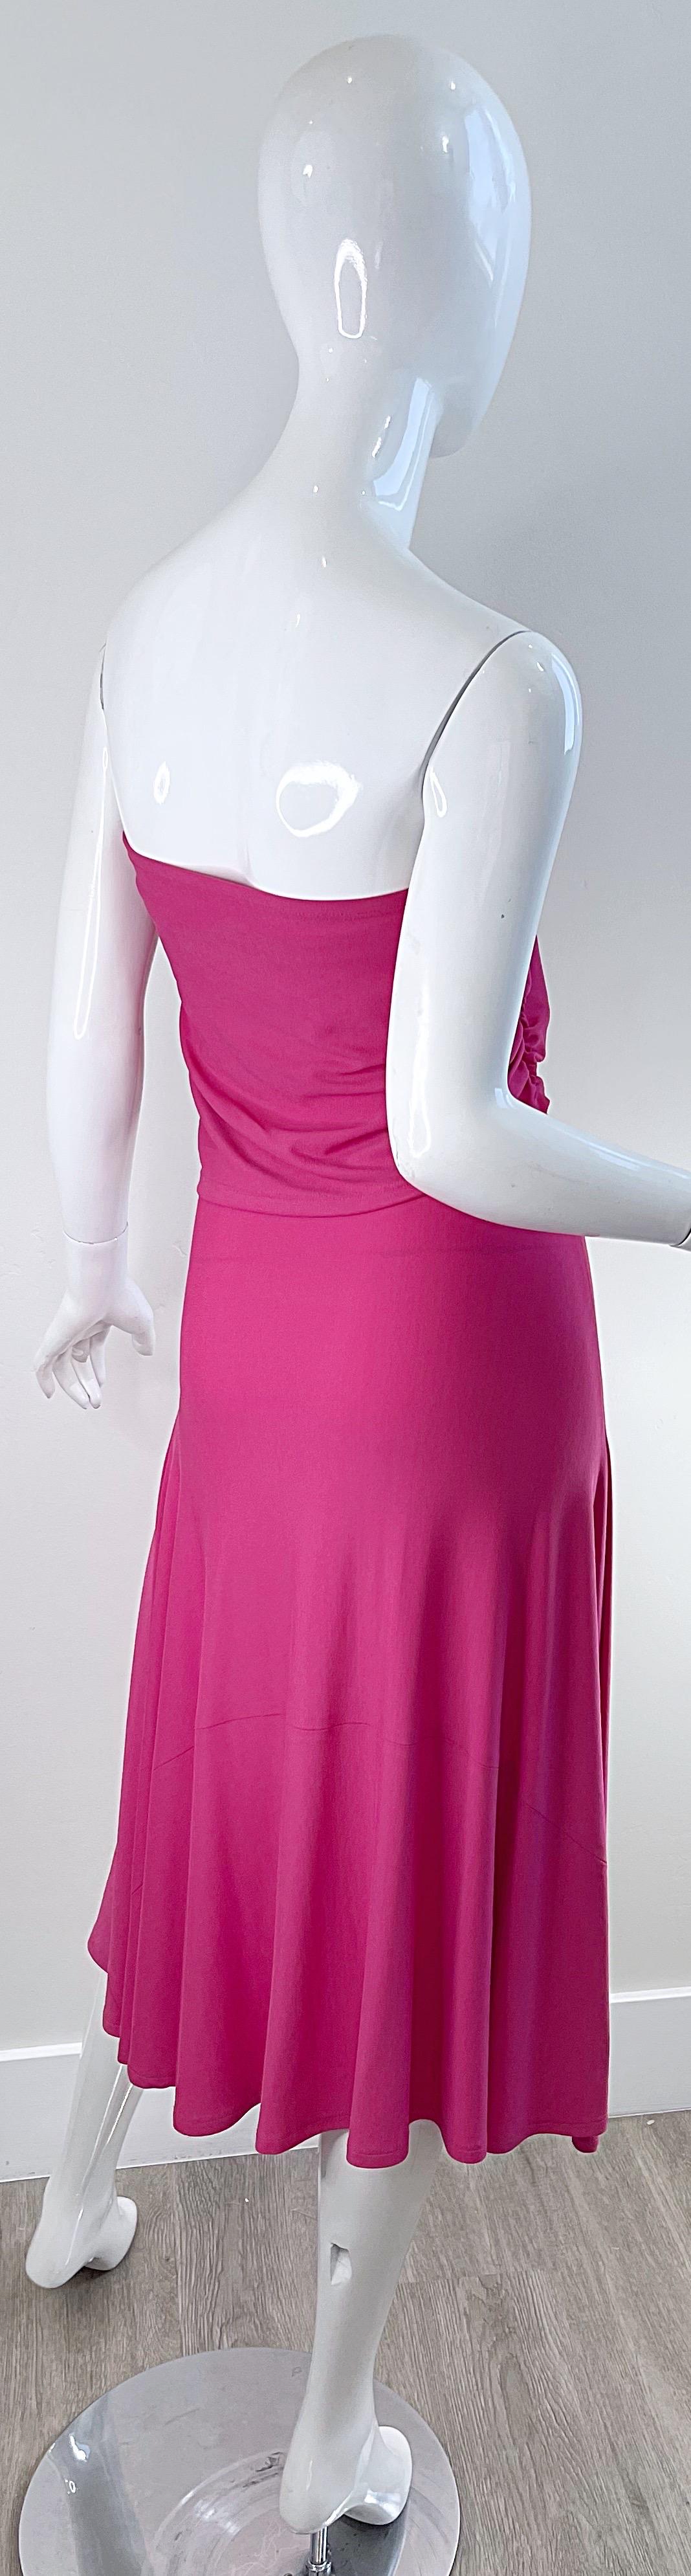 NWT Donna Karan Resort 2016 Hot Pink Size Medium Strapless Tube Dress For Sale 4